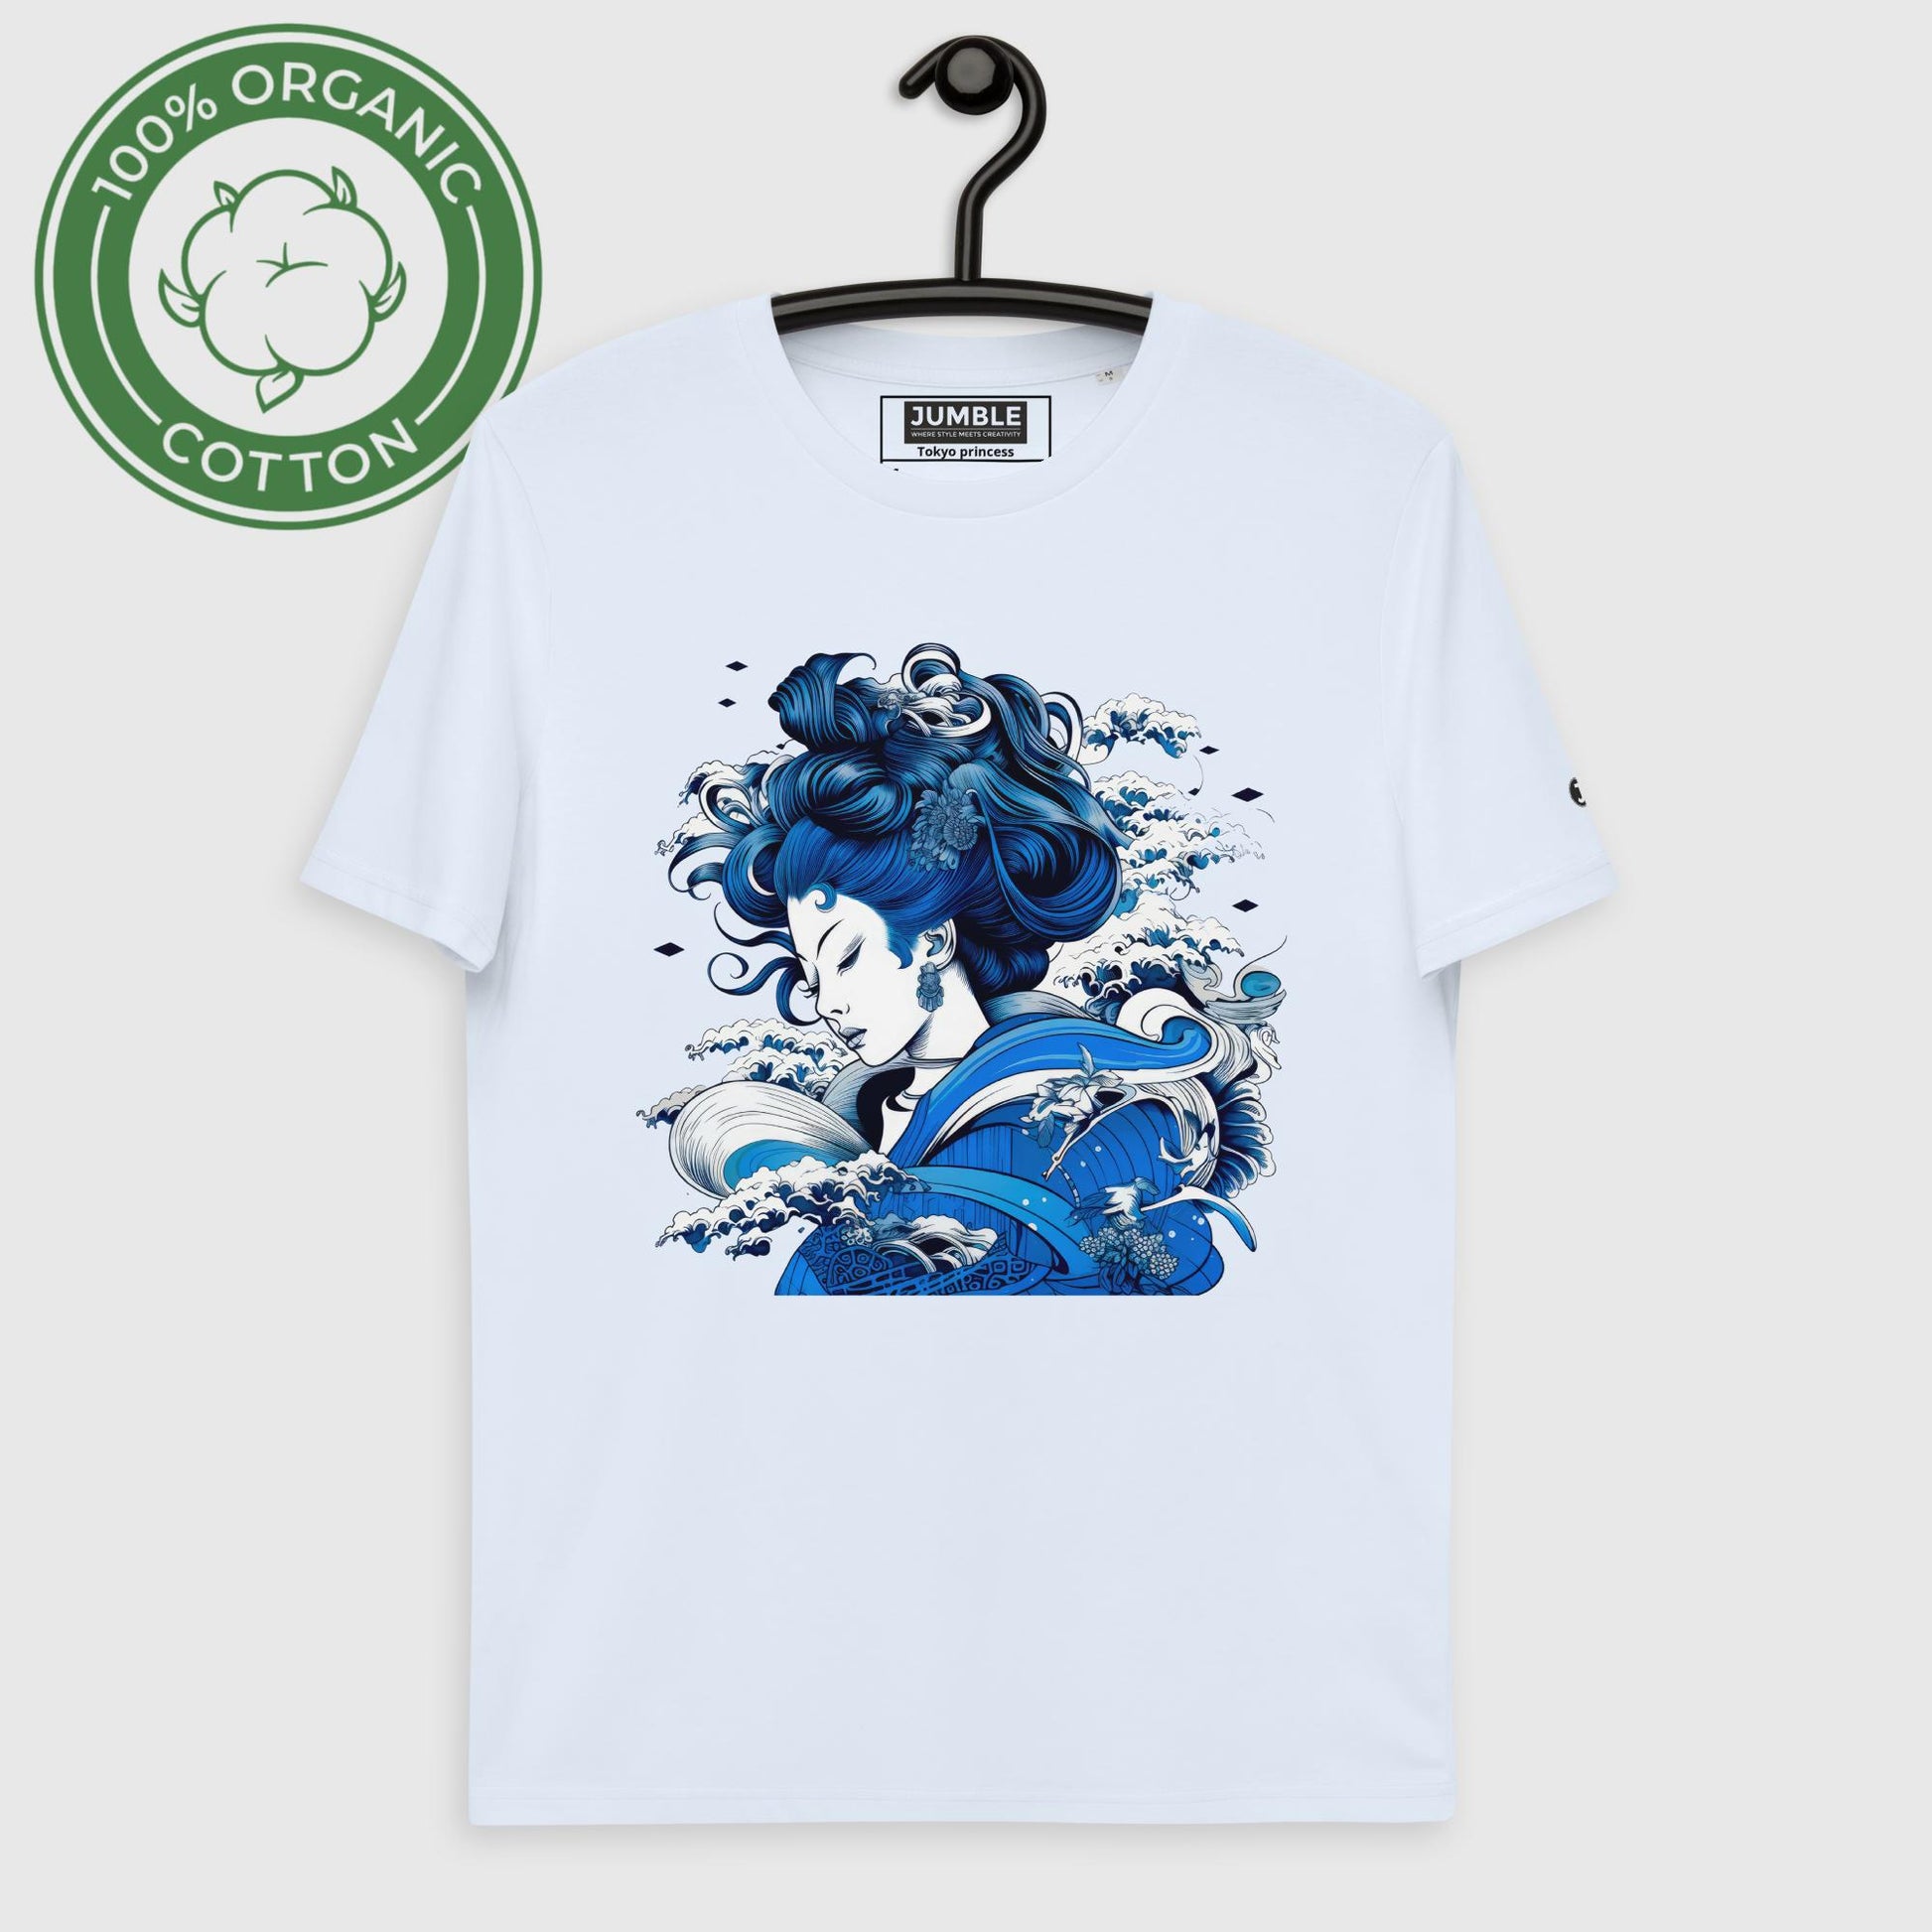 Tokyo Princess Unisex organic cotton t-shirt- in serene blue, on hanger